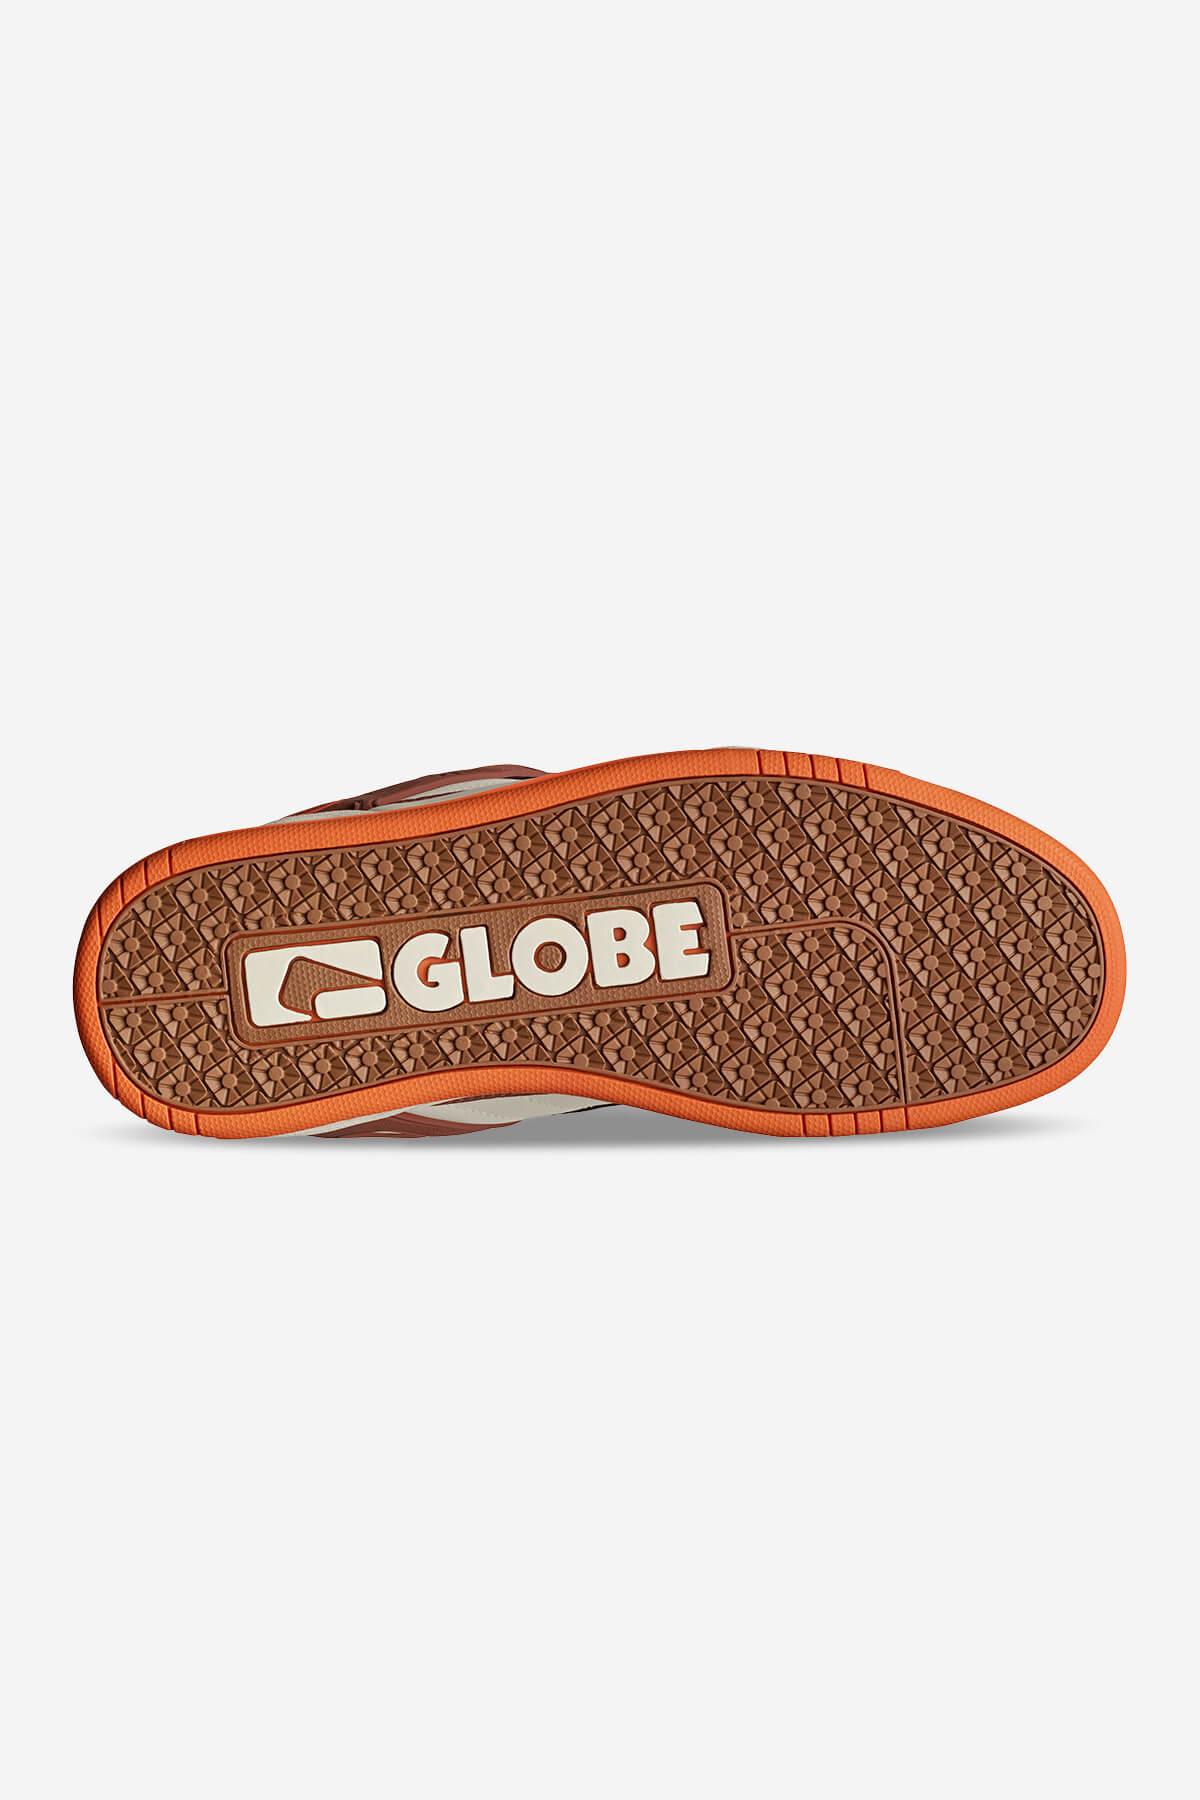 Globe - Tilt - Antico/Mocha - skateboard Scarpe